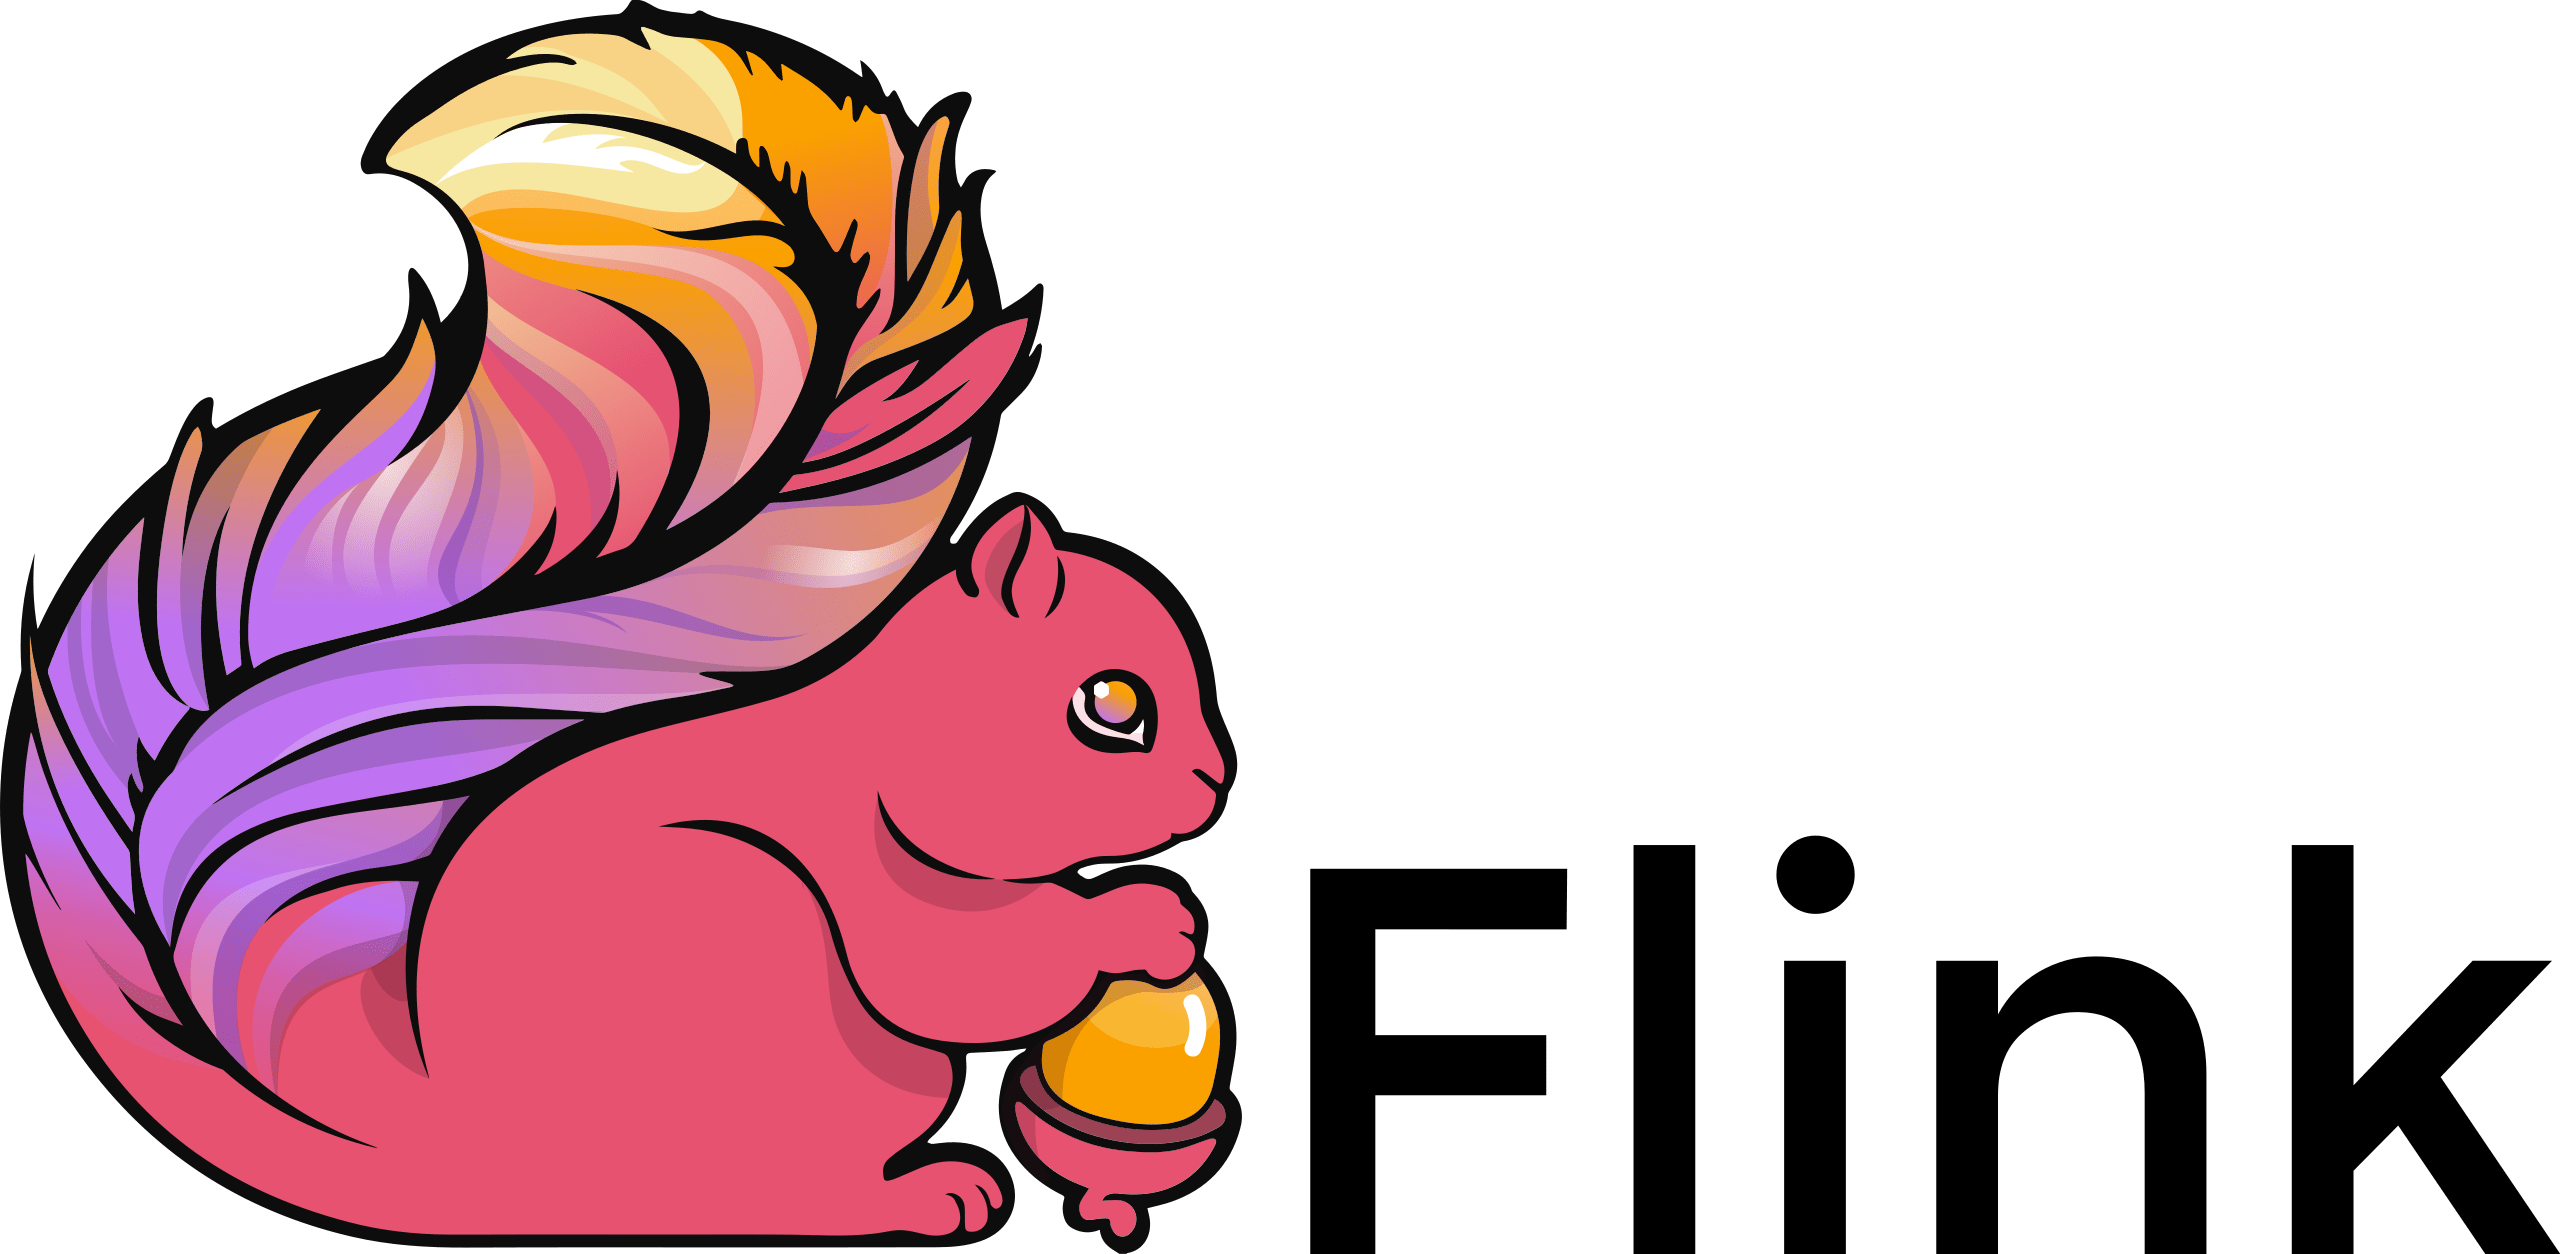 flink logo